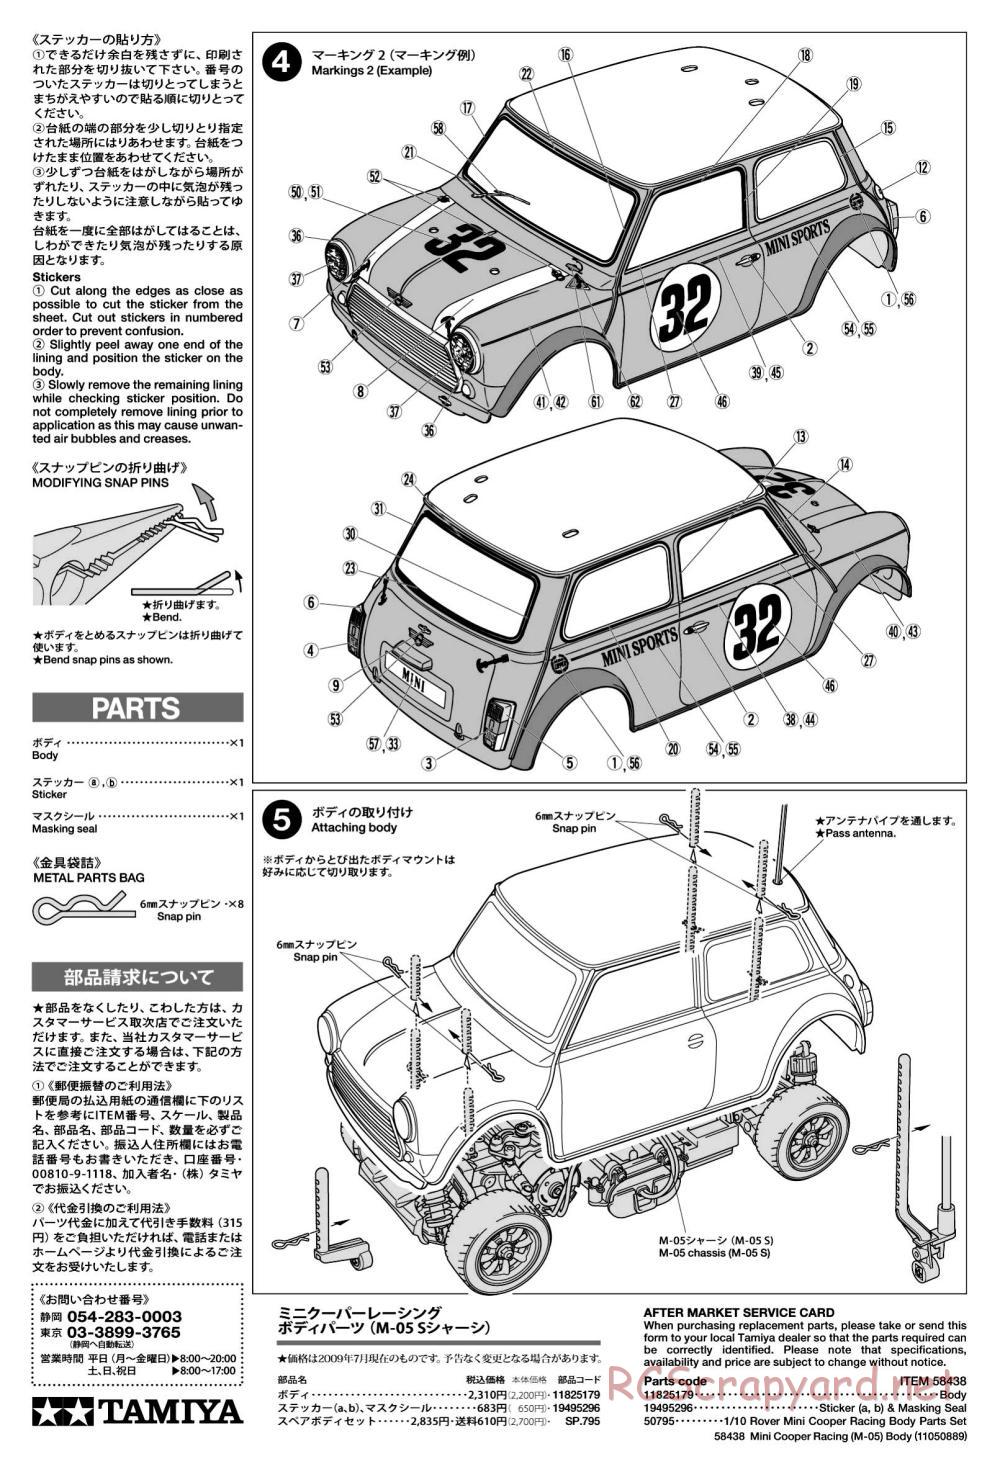 Tamiya - Mini Cooper Racing - M-05 Chassis - Body Manual - Page 2